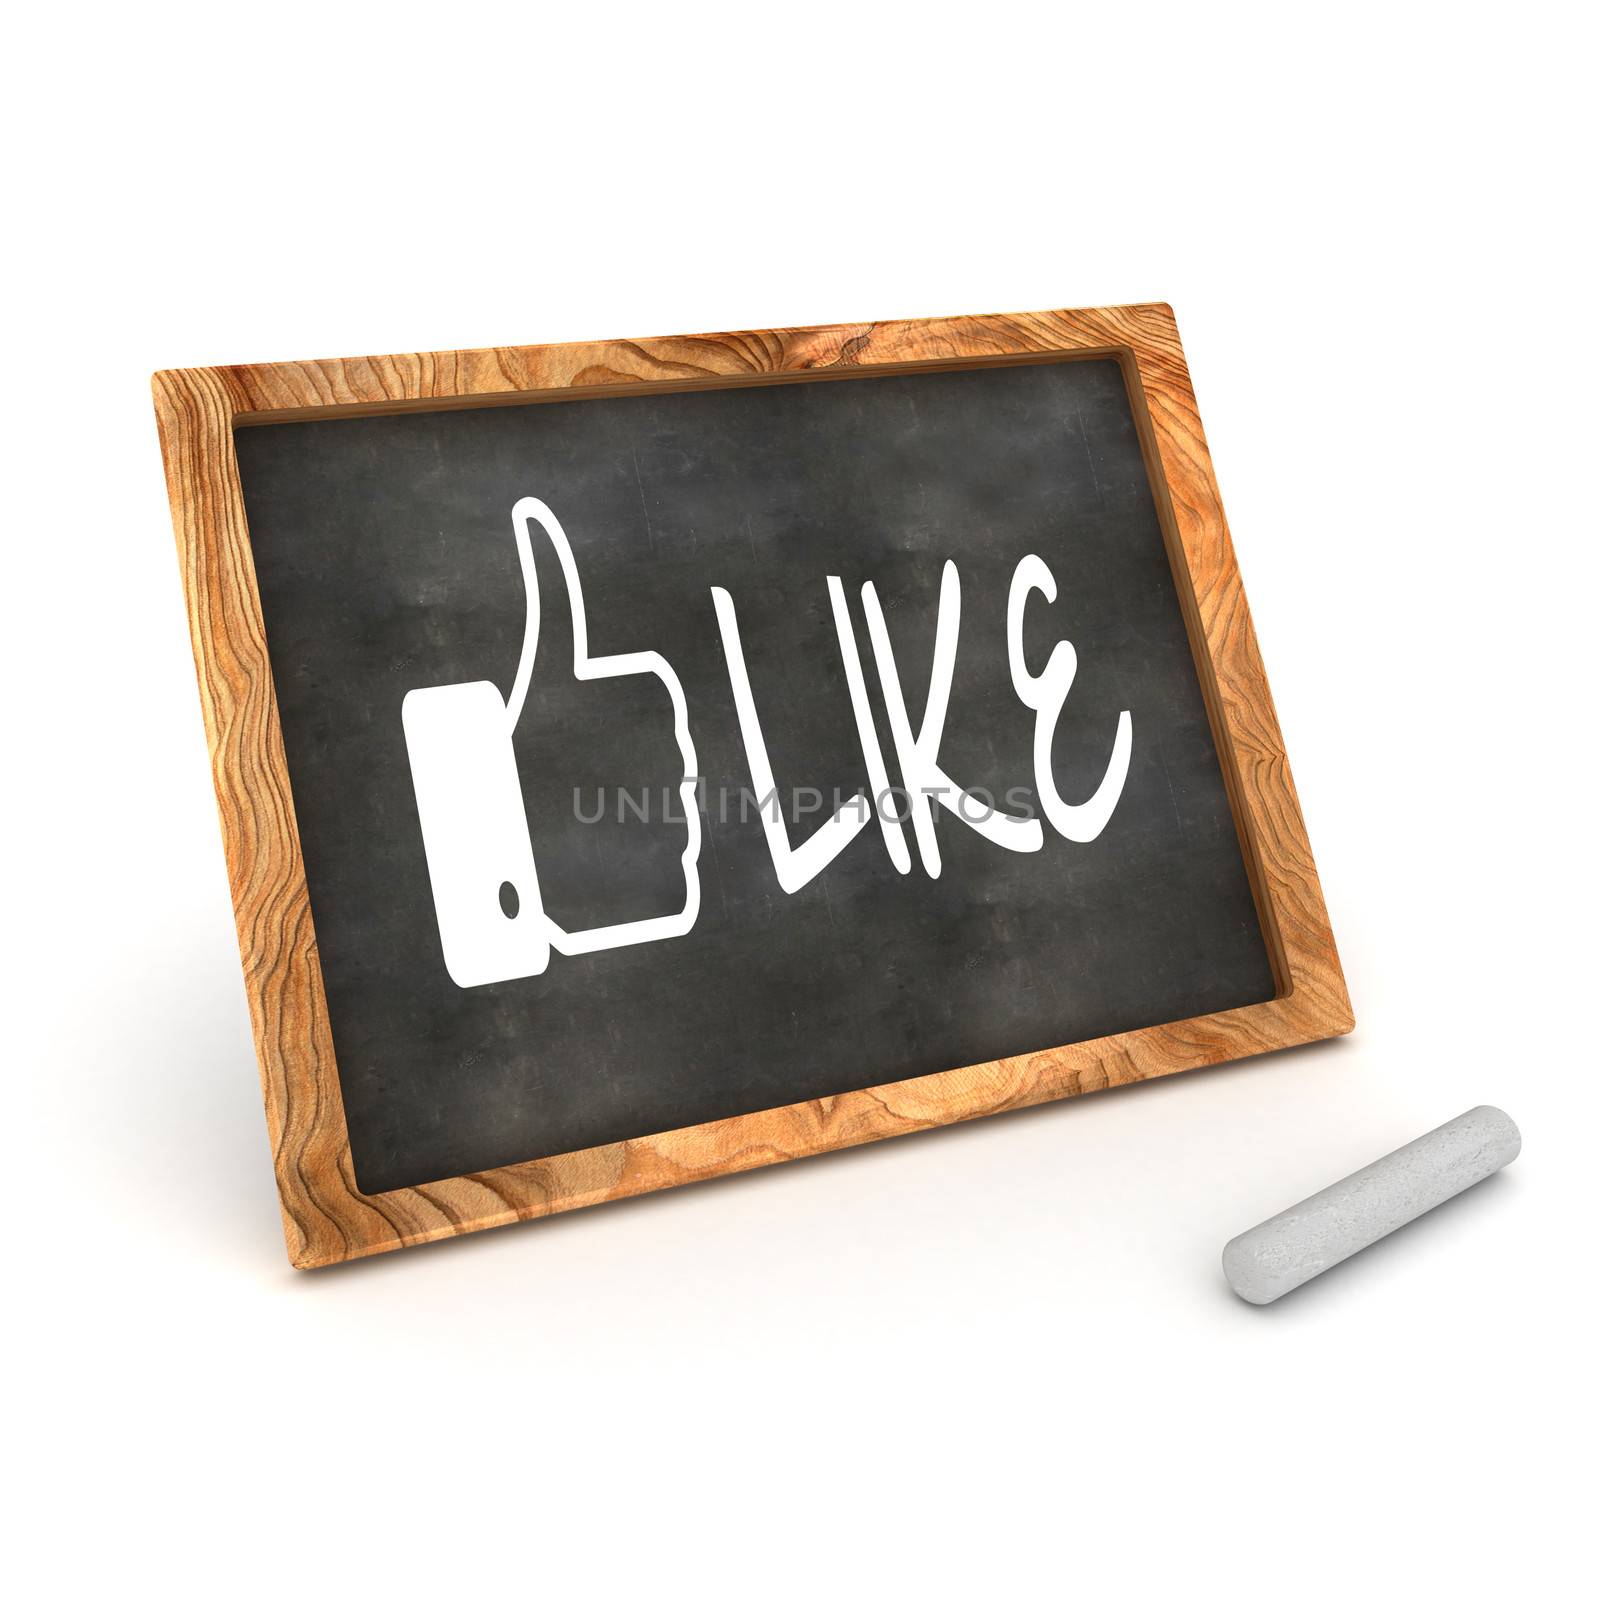 Blackboard showing "Like us" as used in social networks by head-off